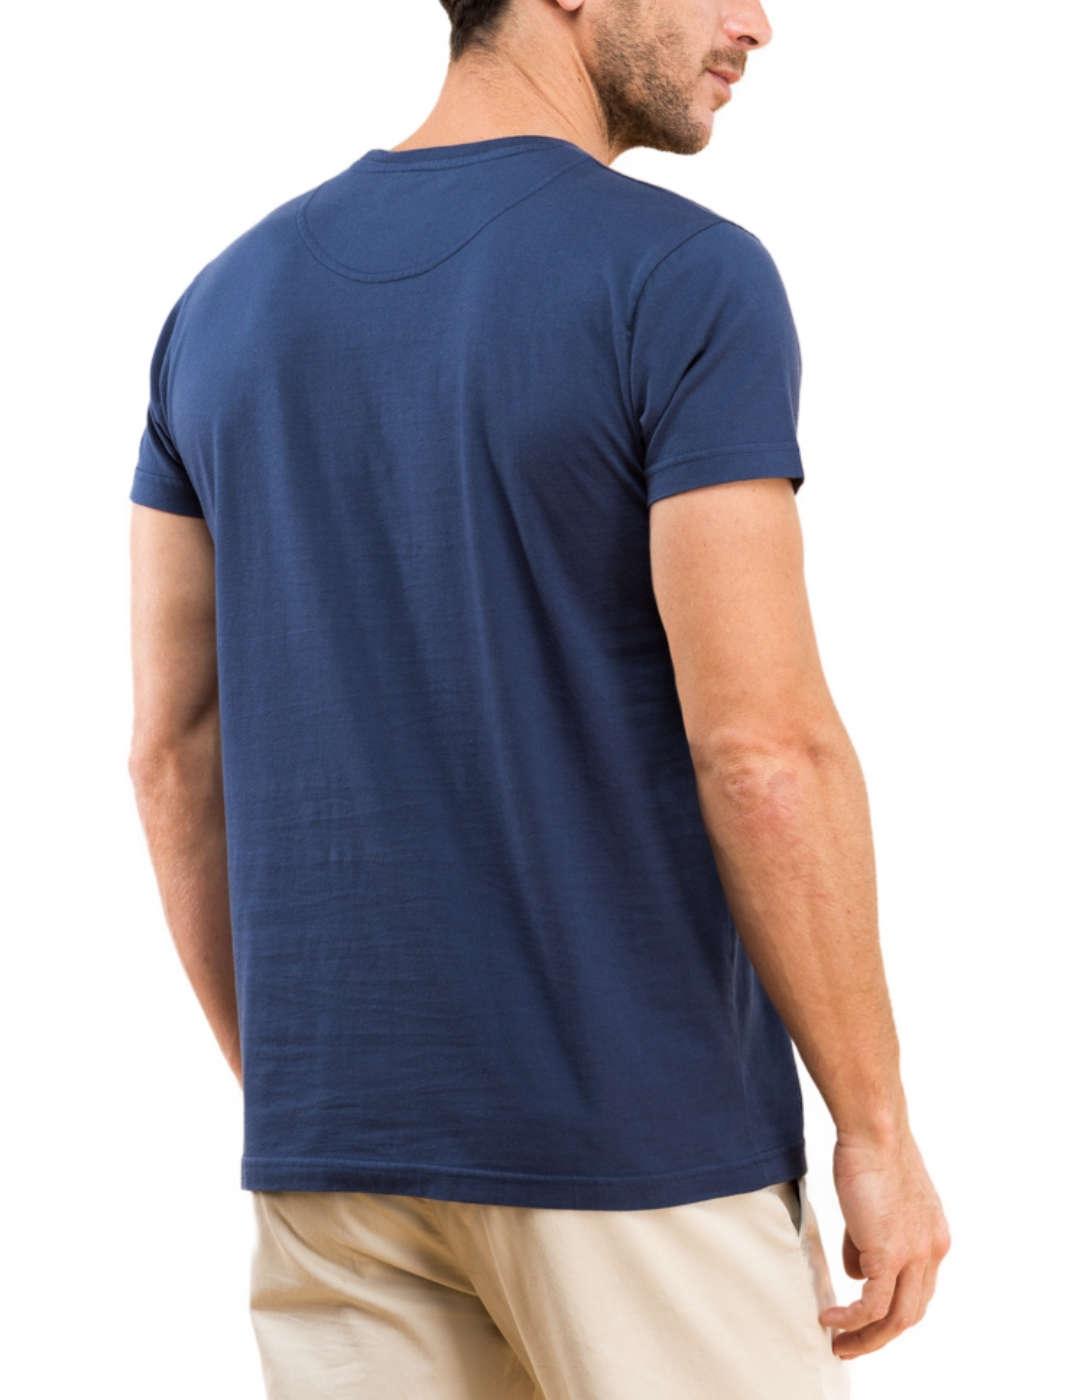 Camiseta Scotta Moto paint marino para hombre